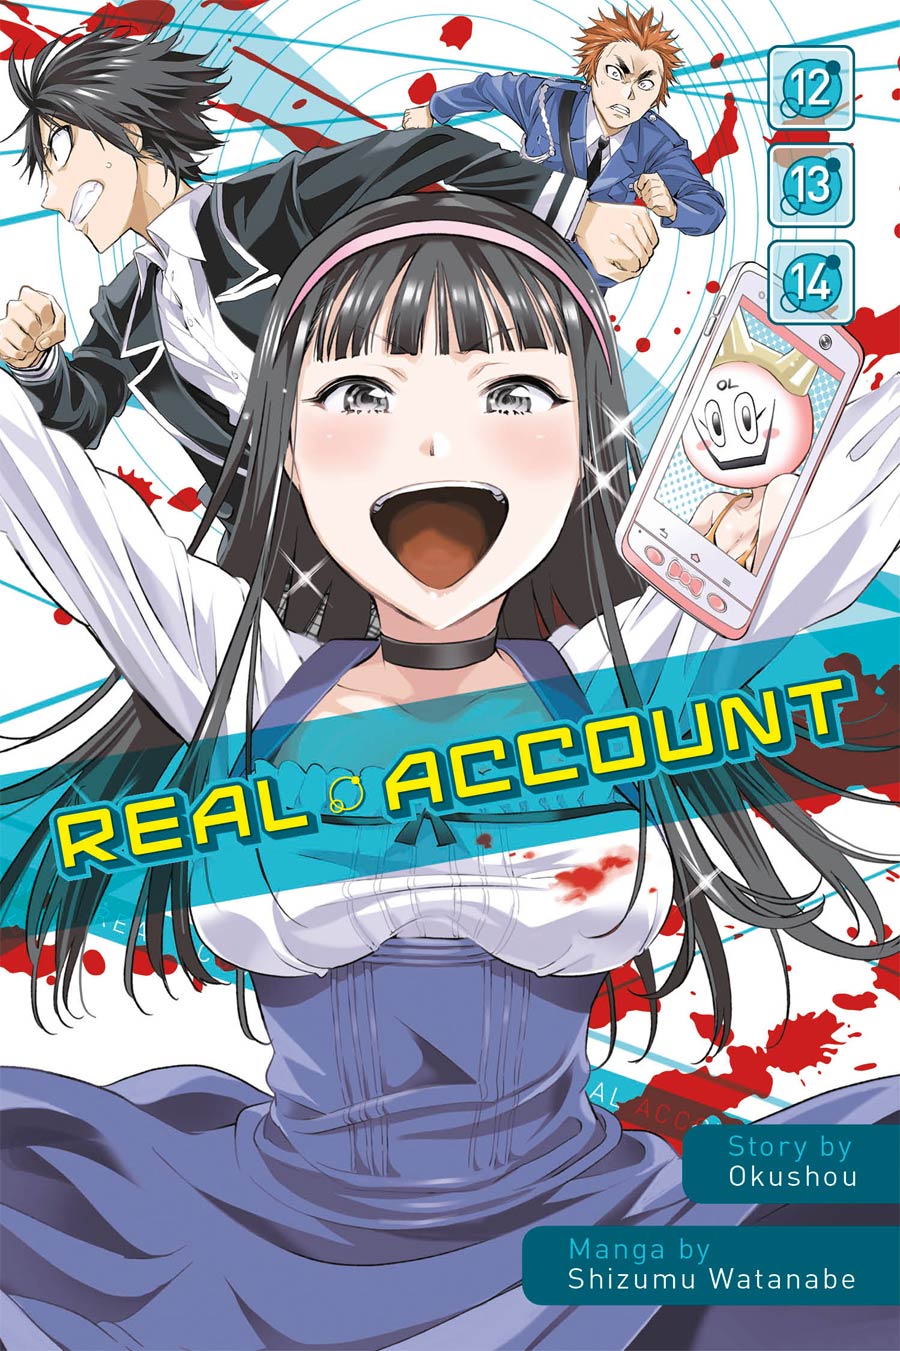 Real Account Vol 12-14 GN